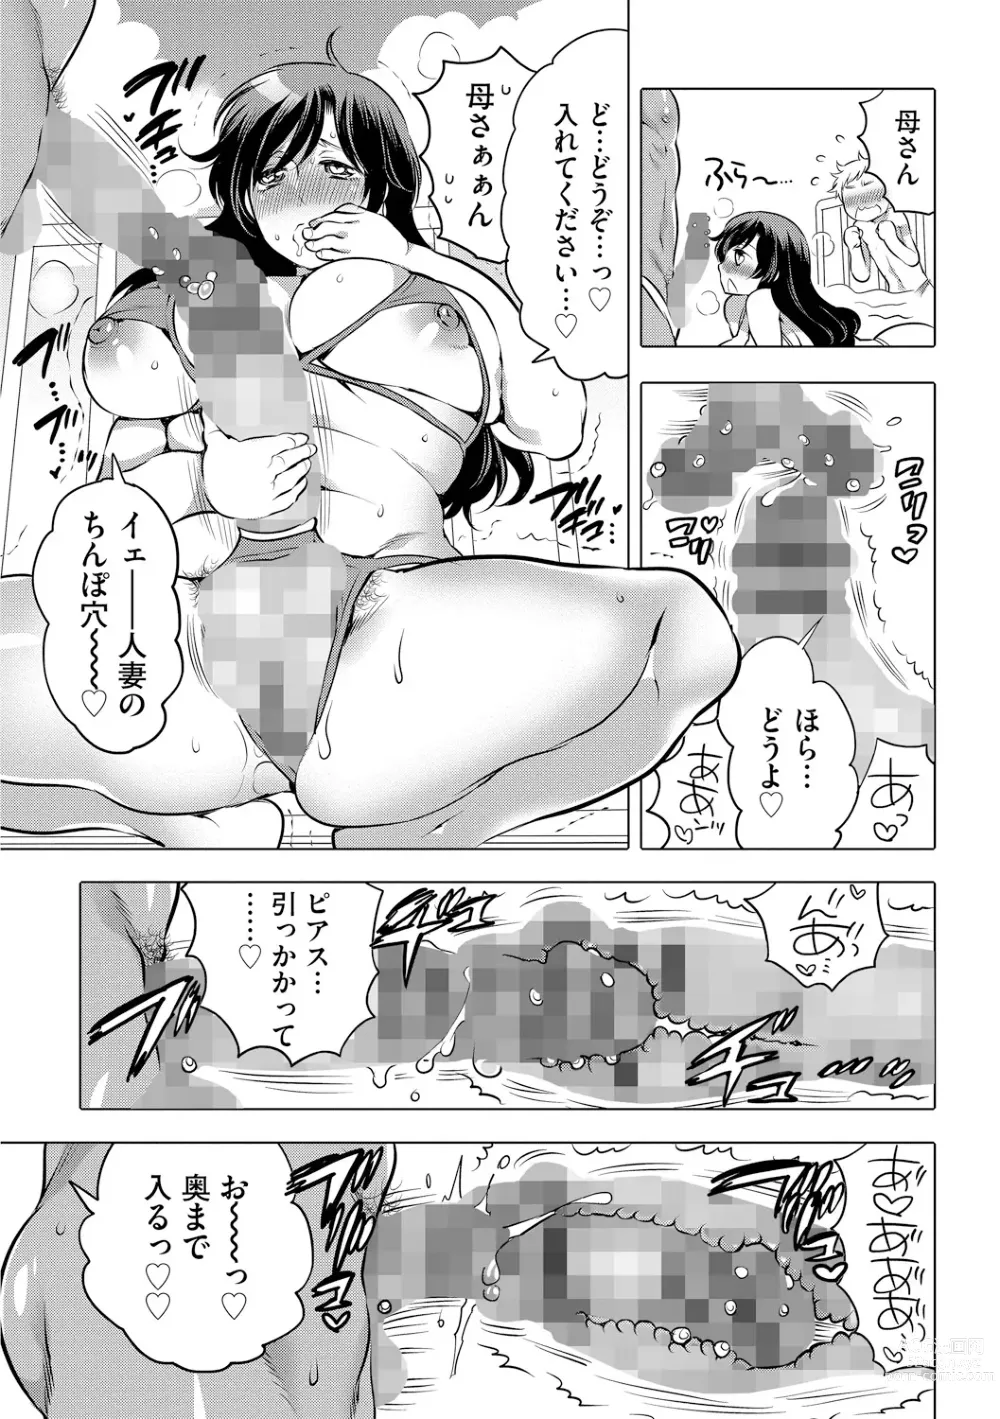 Page 189 of manga Futanari Onee-chan wa Bokura no Omocha  - FUTANARI SISTER IS OUR TOYS